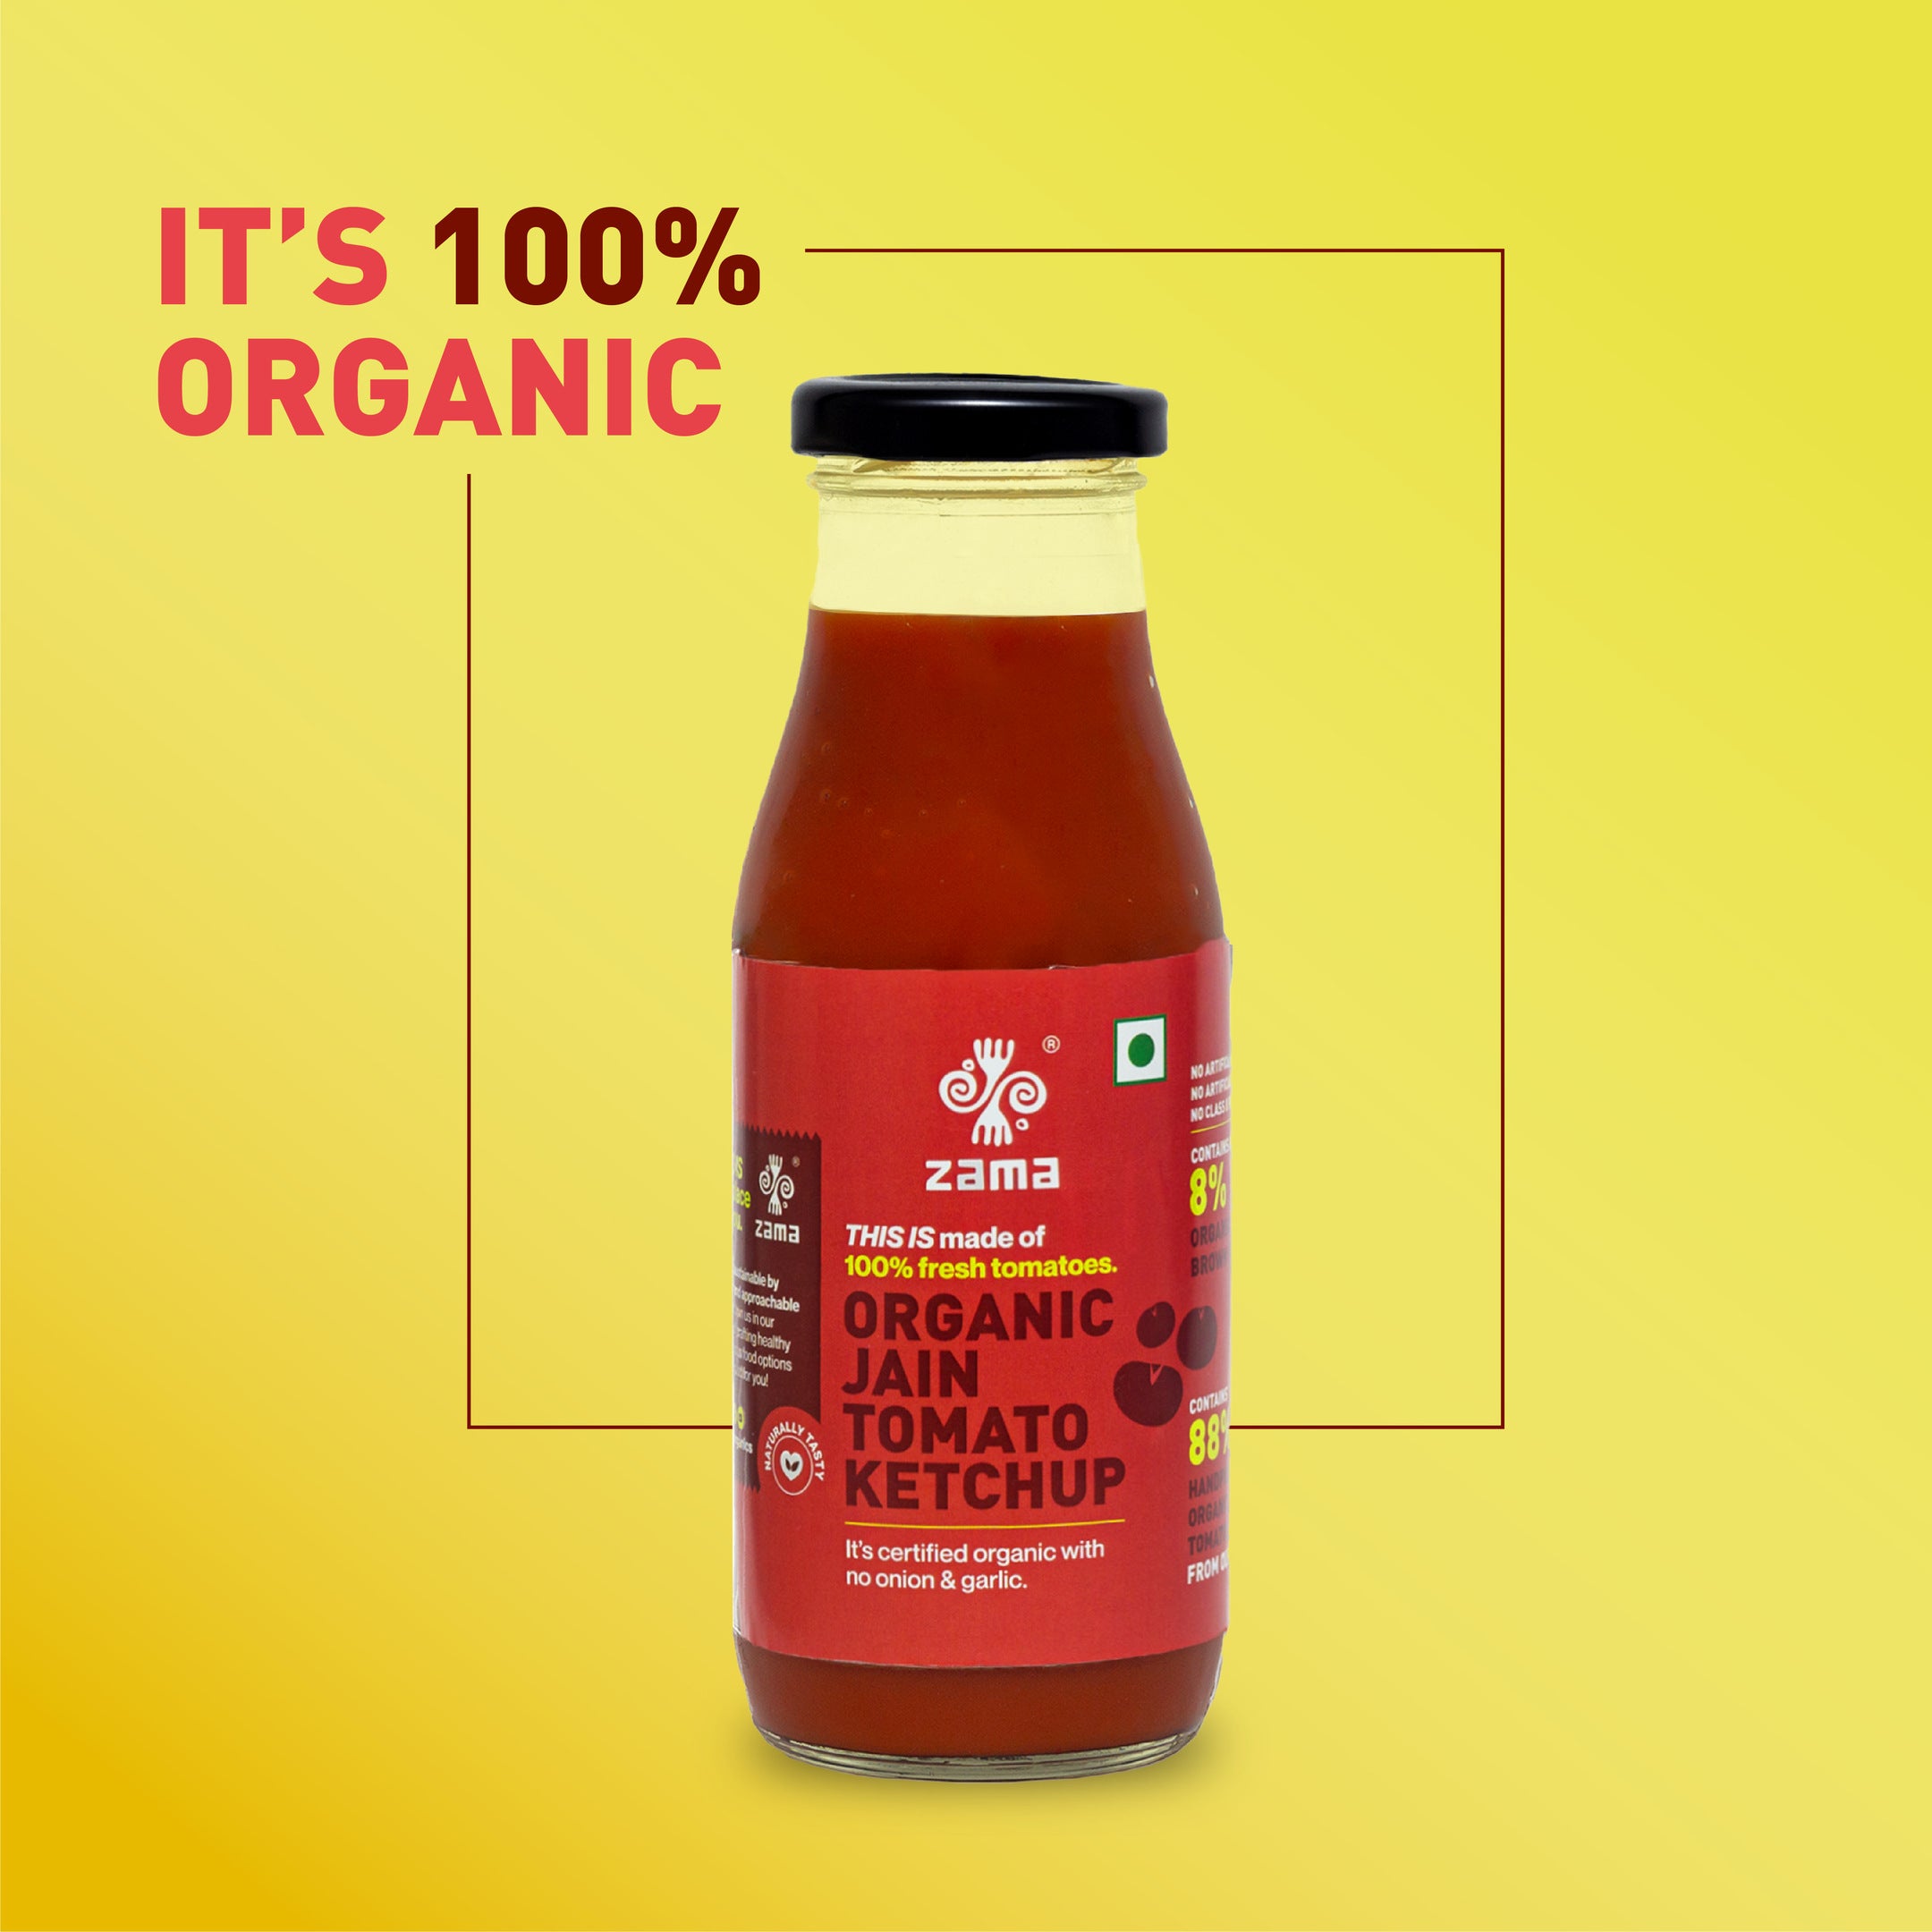 Zama Organics Organic Jain Tomato Ketchup 300g